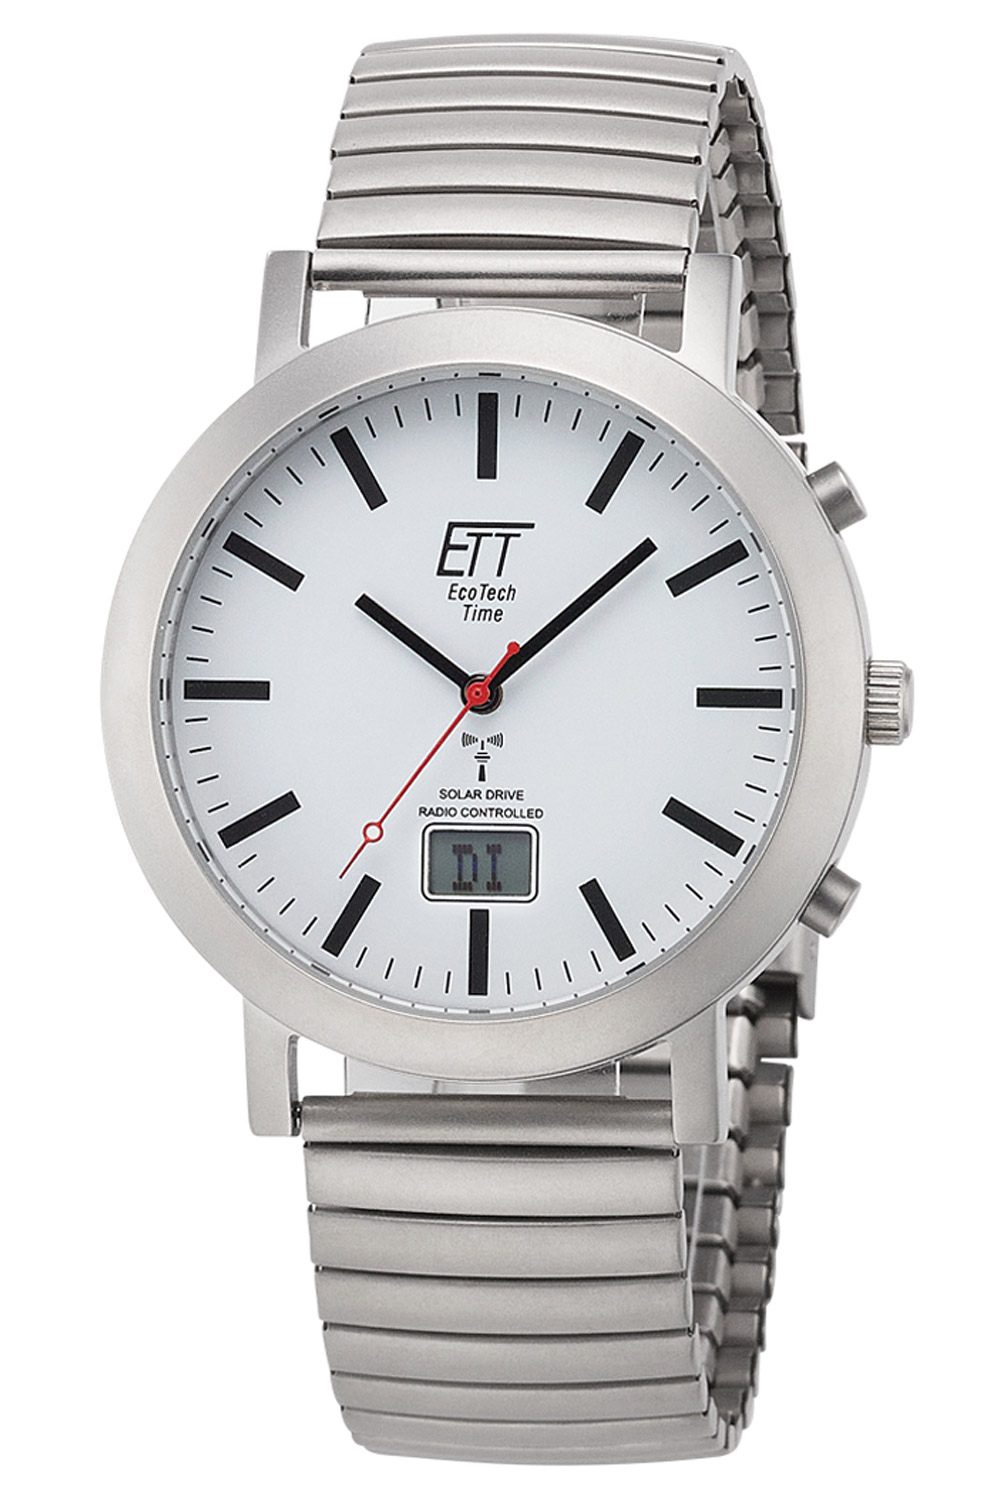 Watch Station uhrcenter mit ETT Tech Eco Herren-Armbanduhr • Zugband EGS-11580-11M Funk-Solar Time